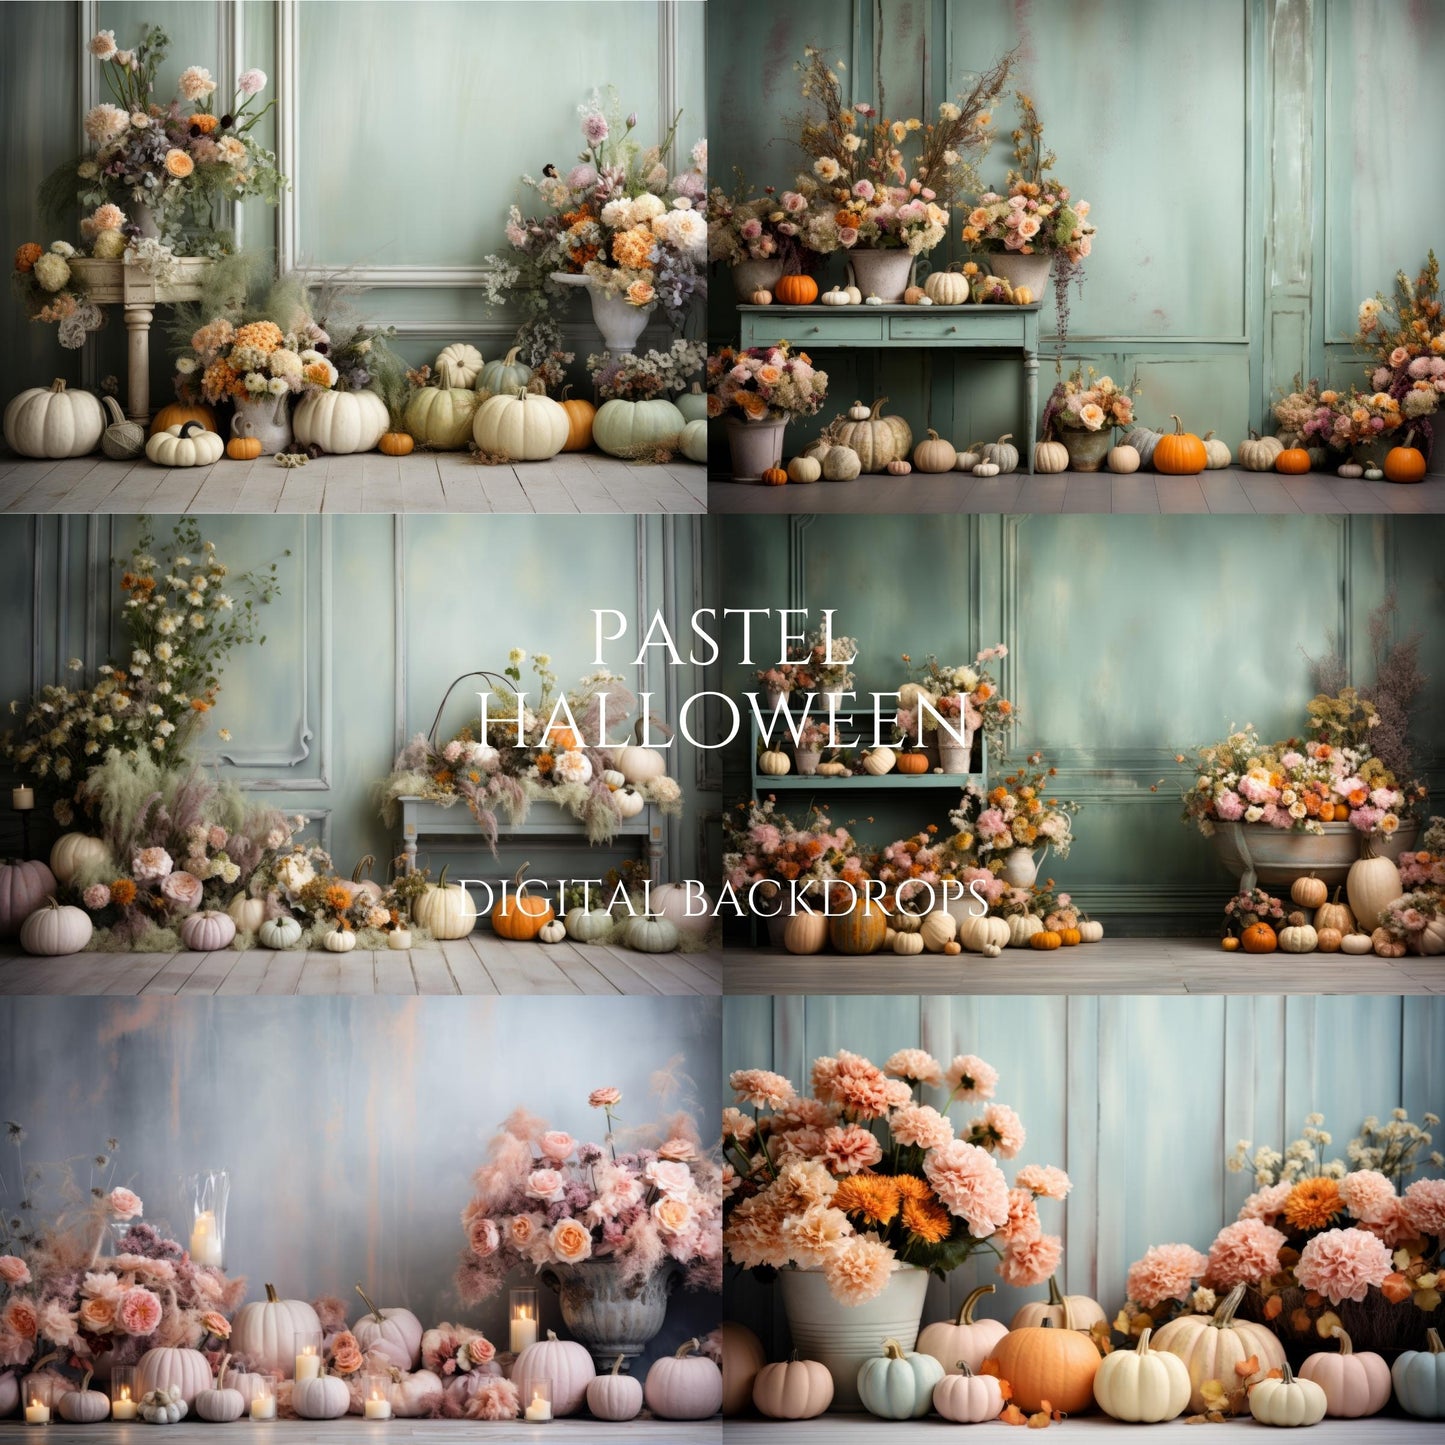 Pastel Halloween Digital Backdrops